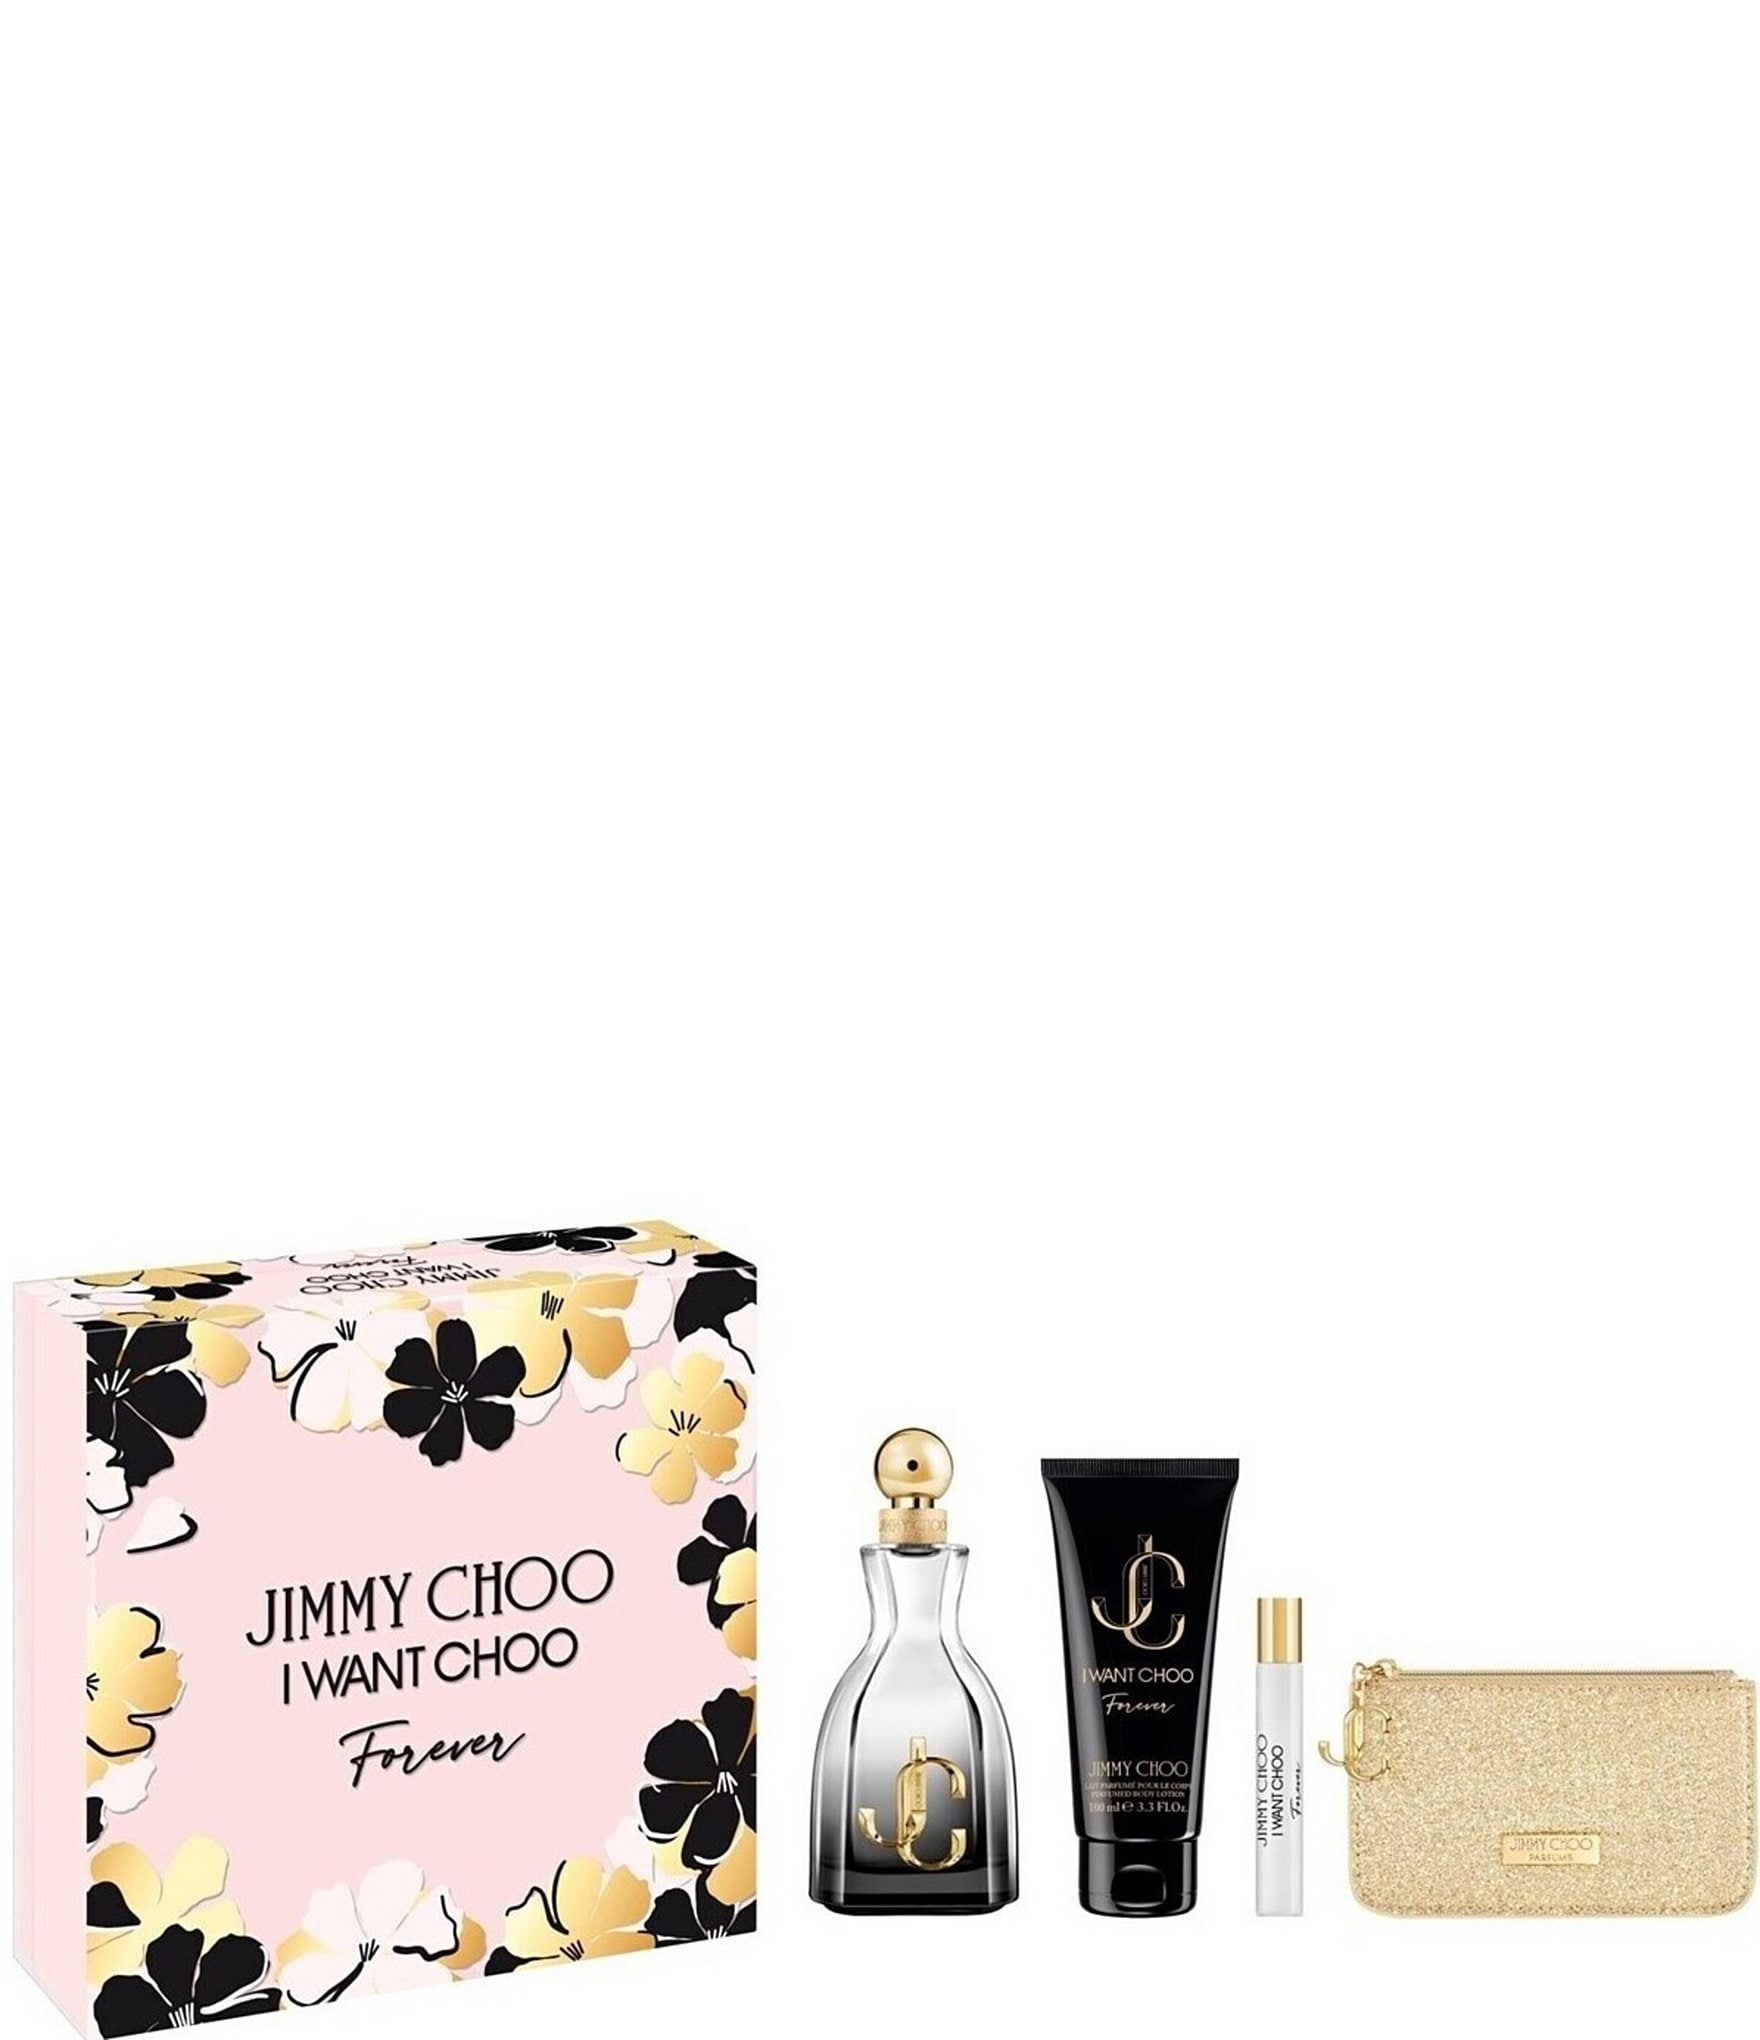  JIMMY CHOO Parfums: JIMMY CHOO I WANT CHOO